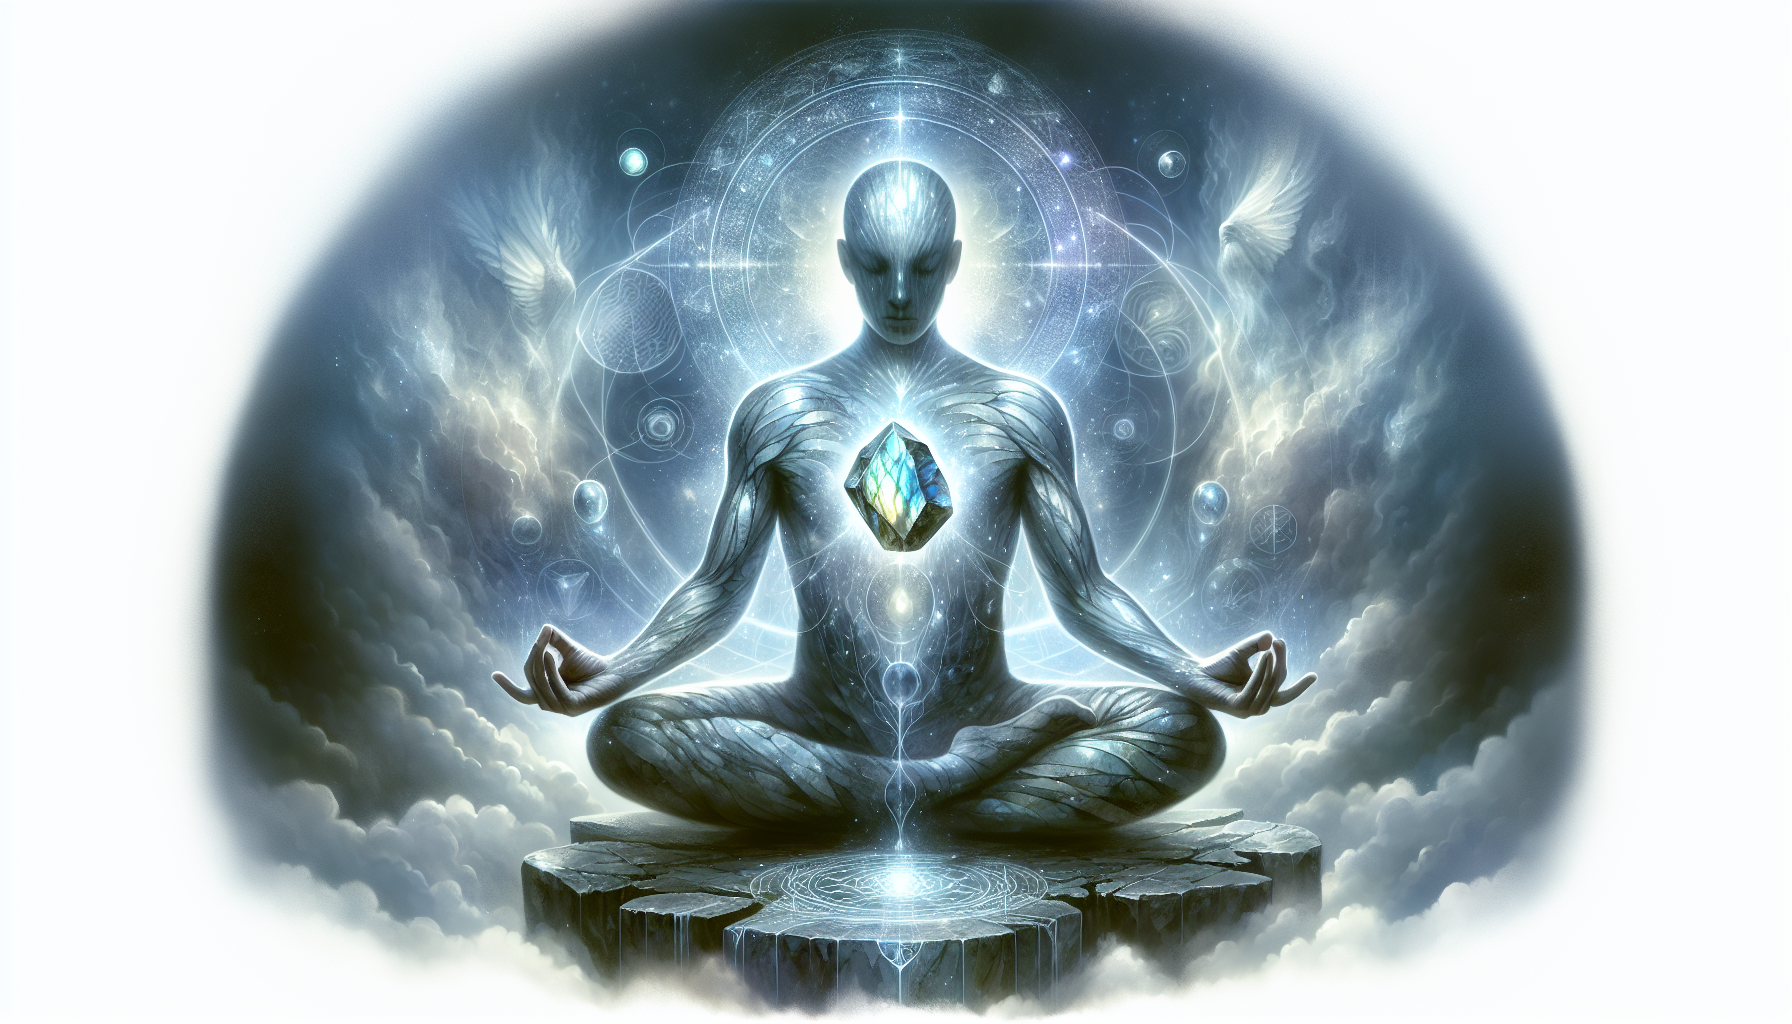 Illustration of spiritual awakening and psychic abilities with labradorite